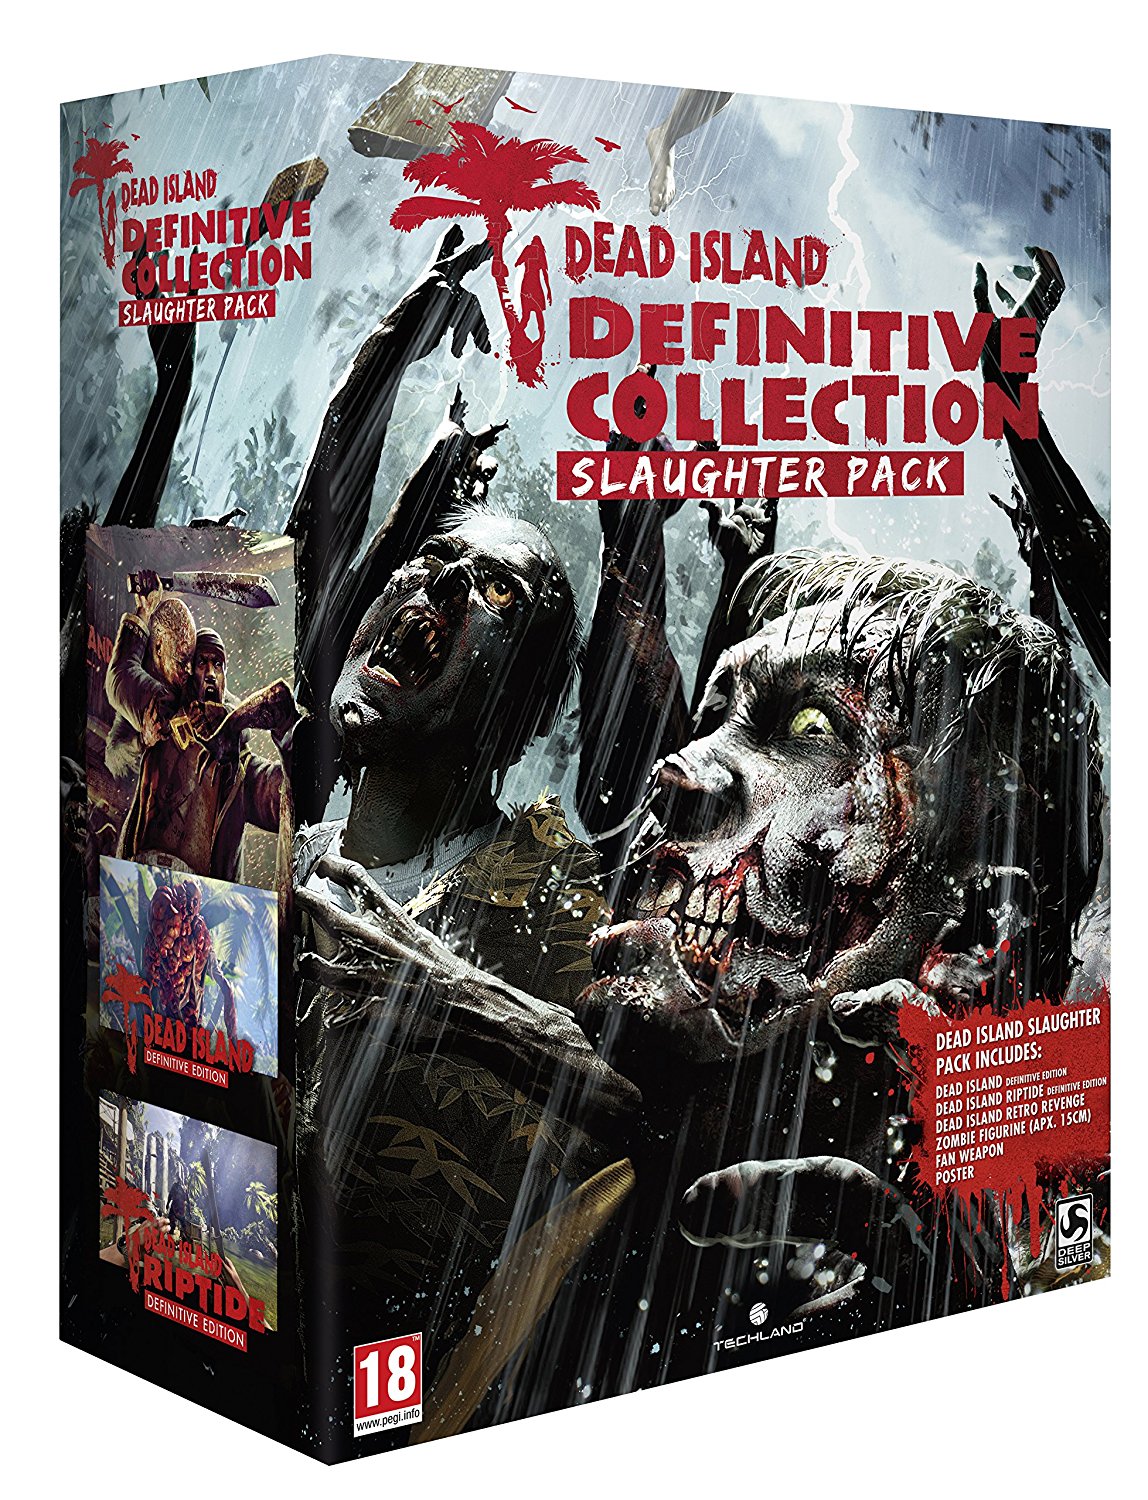 Dead Island Collectión Slaughter Pack